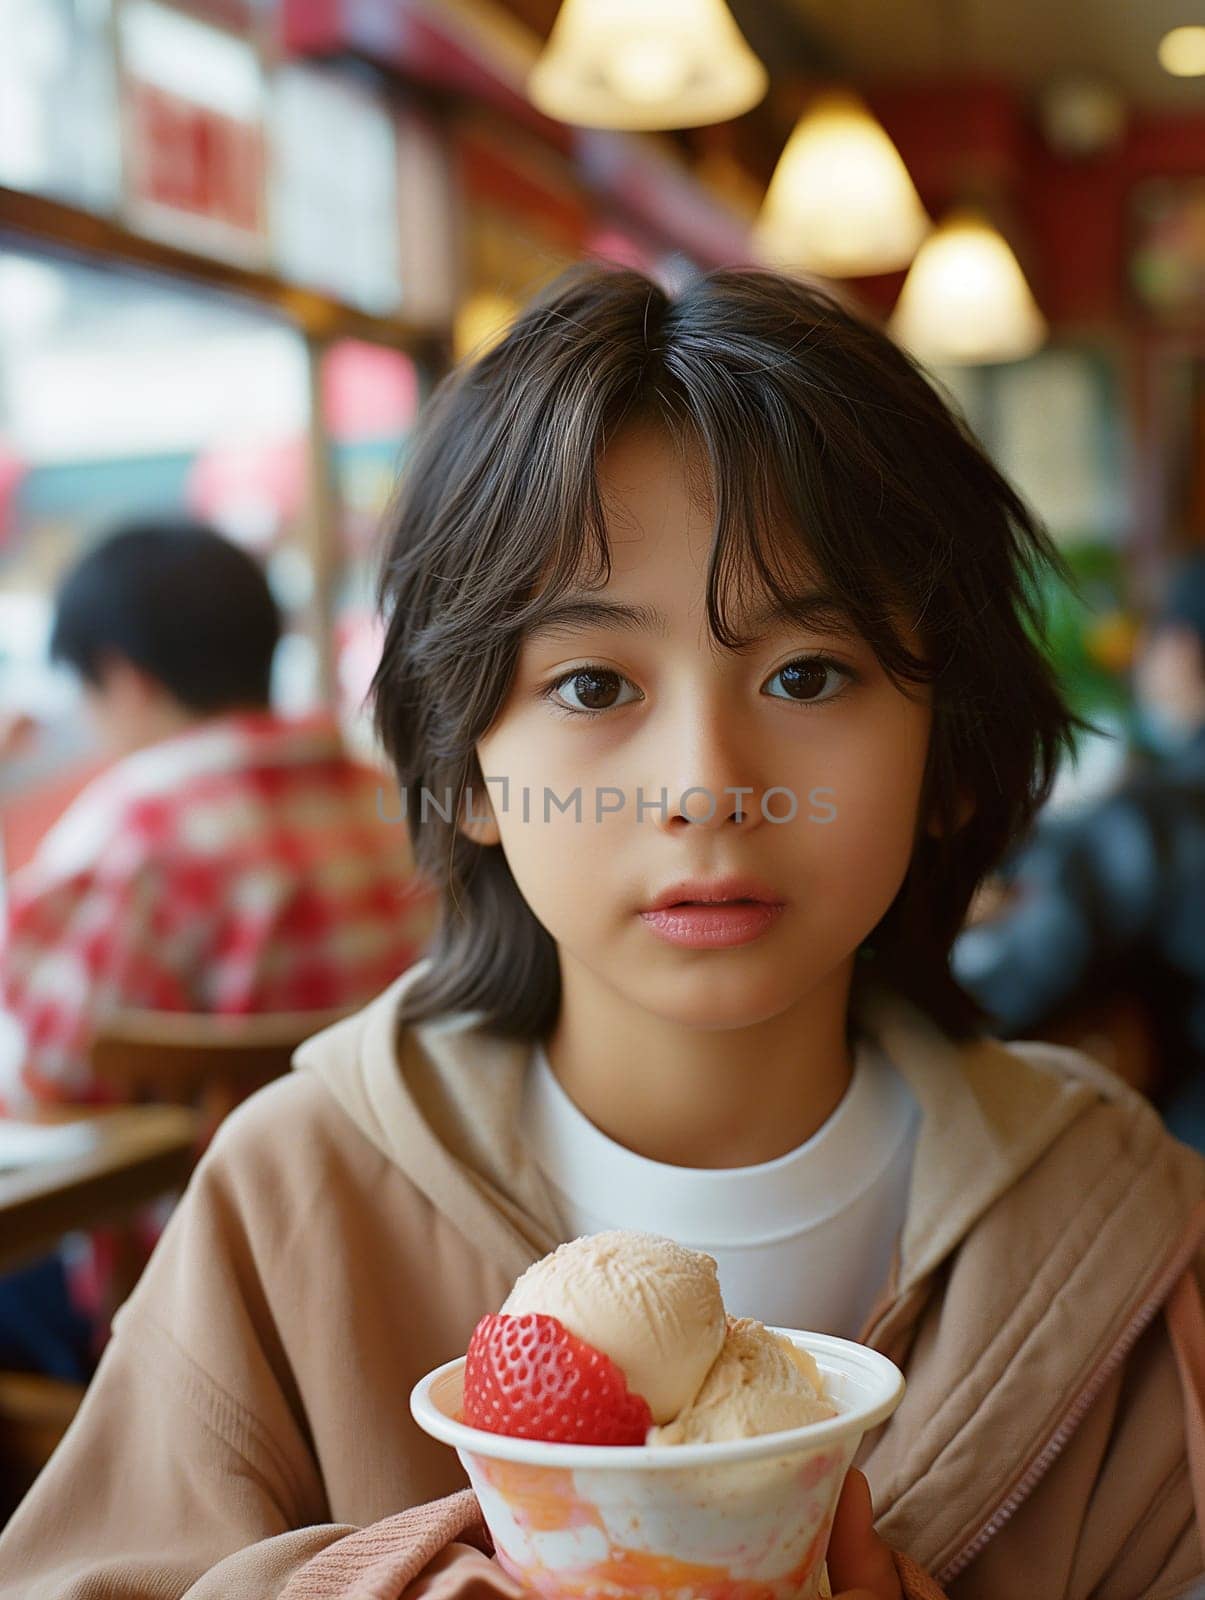 A joyful child smiles beside a large soft serve ice cream.